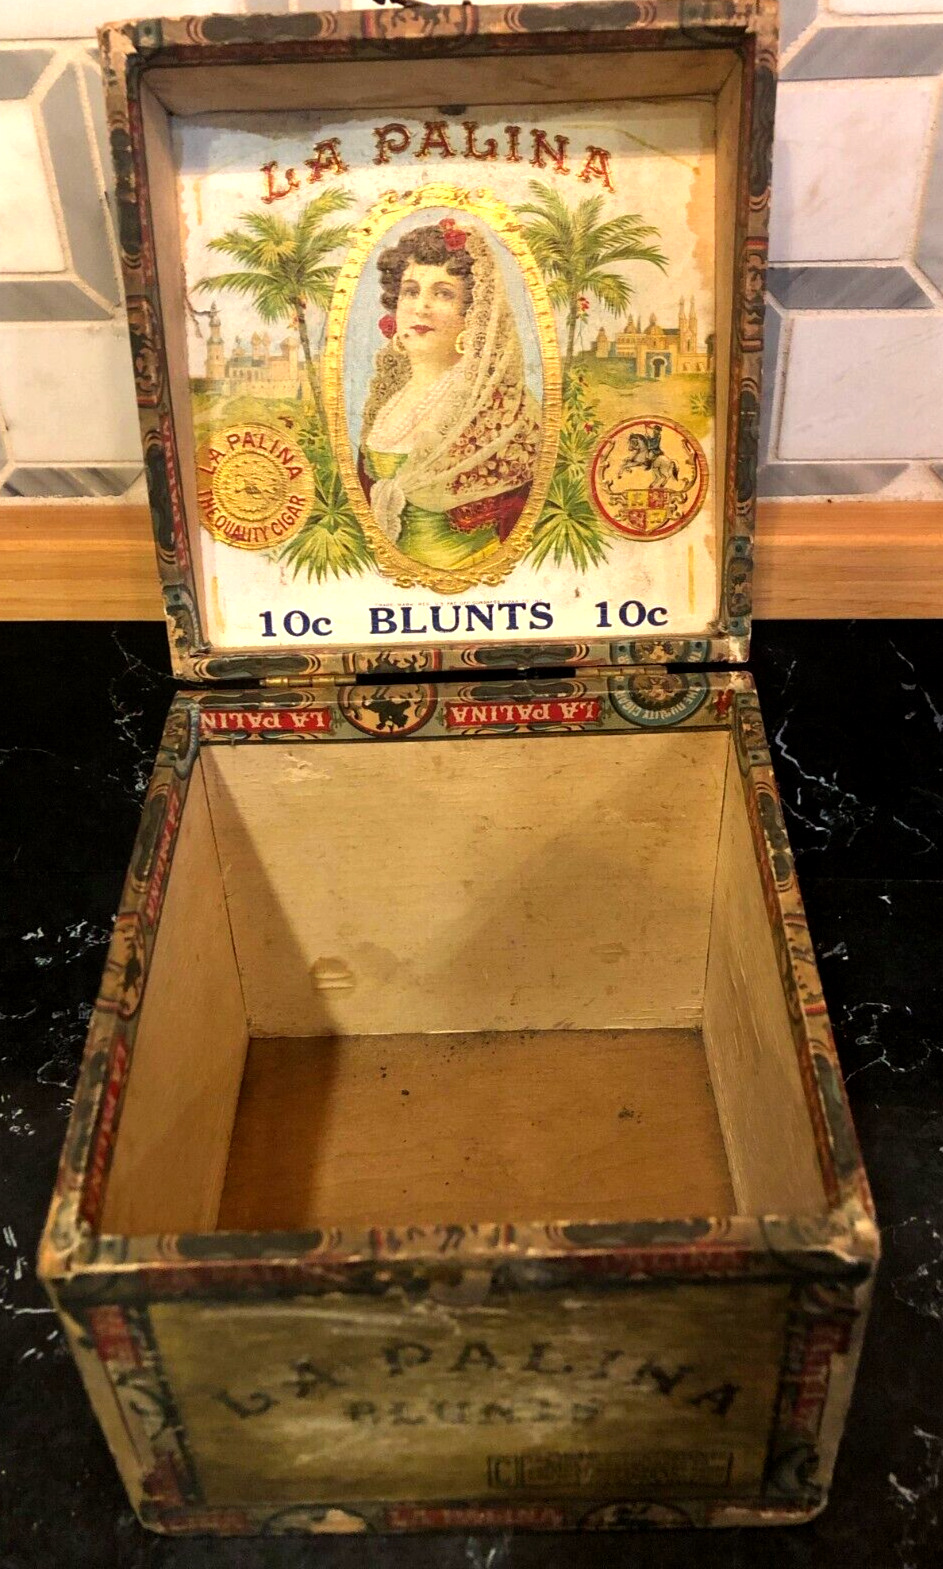 RARE SQUARE Vintage La Palina wooden cigar box, Congress Cigar Co.